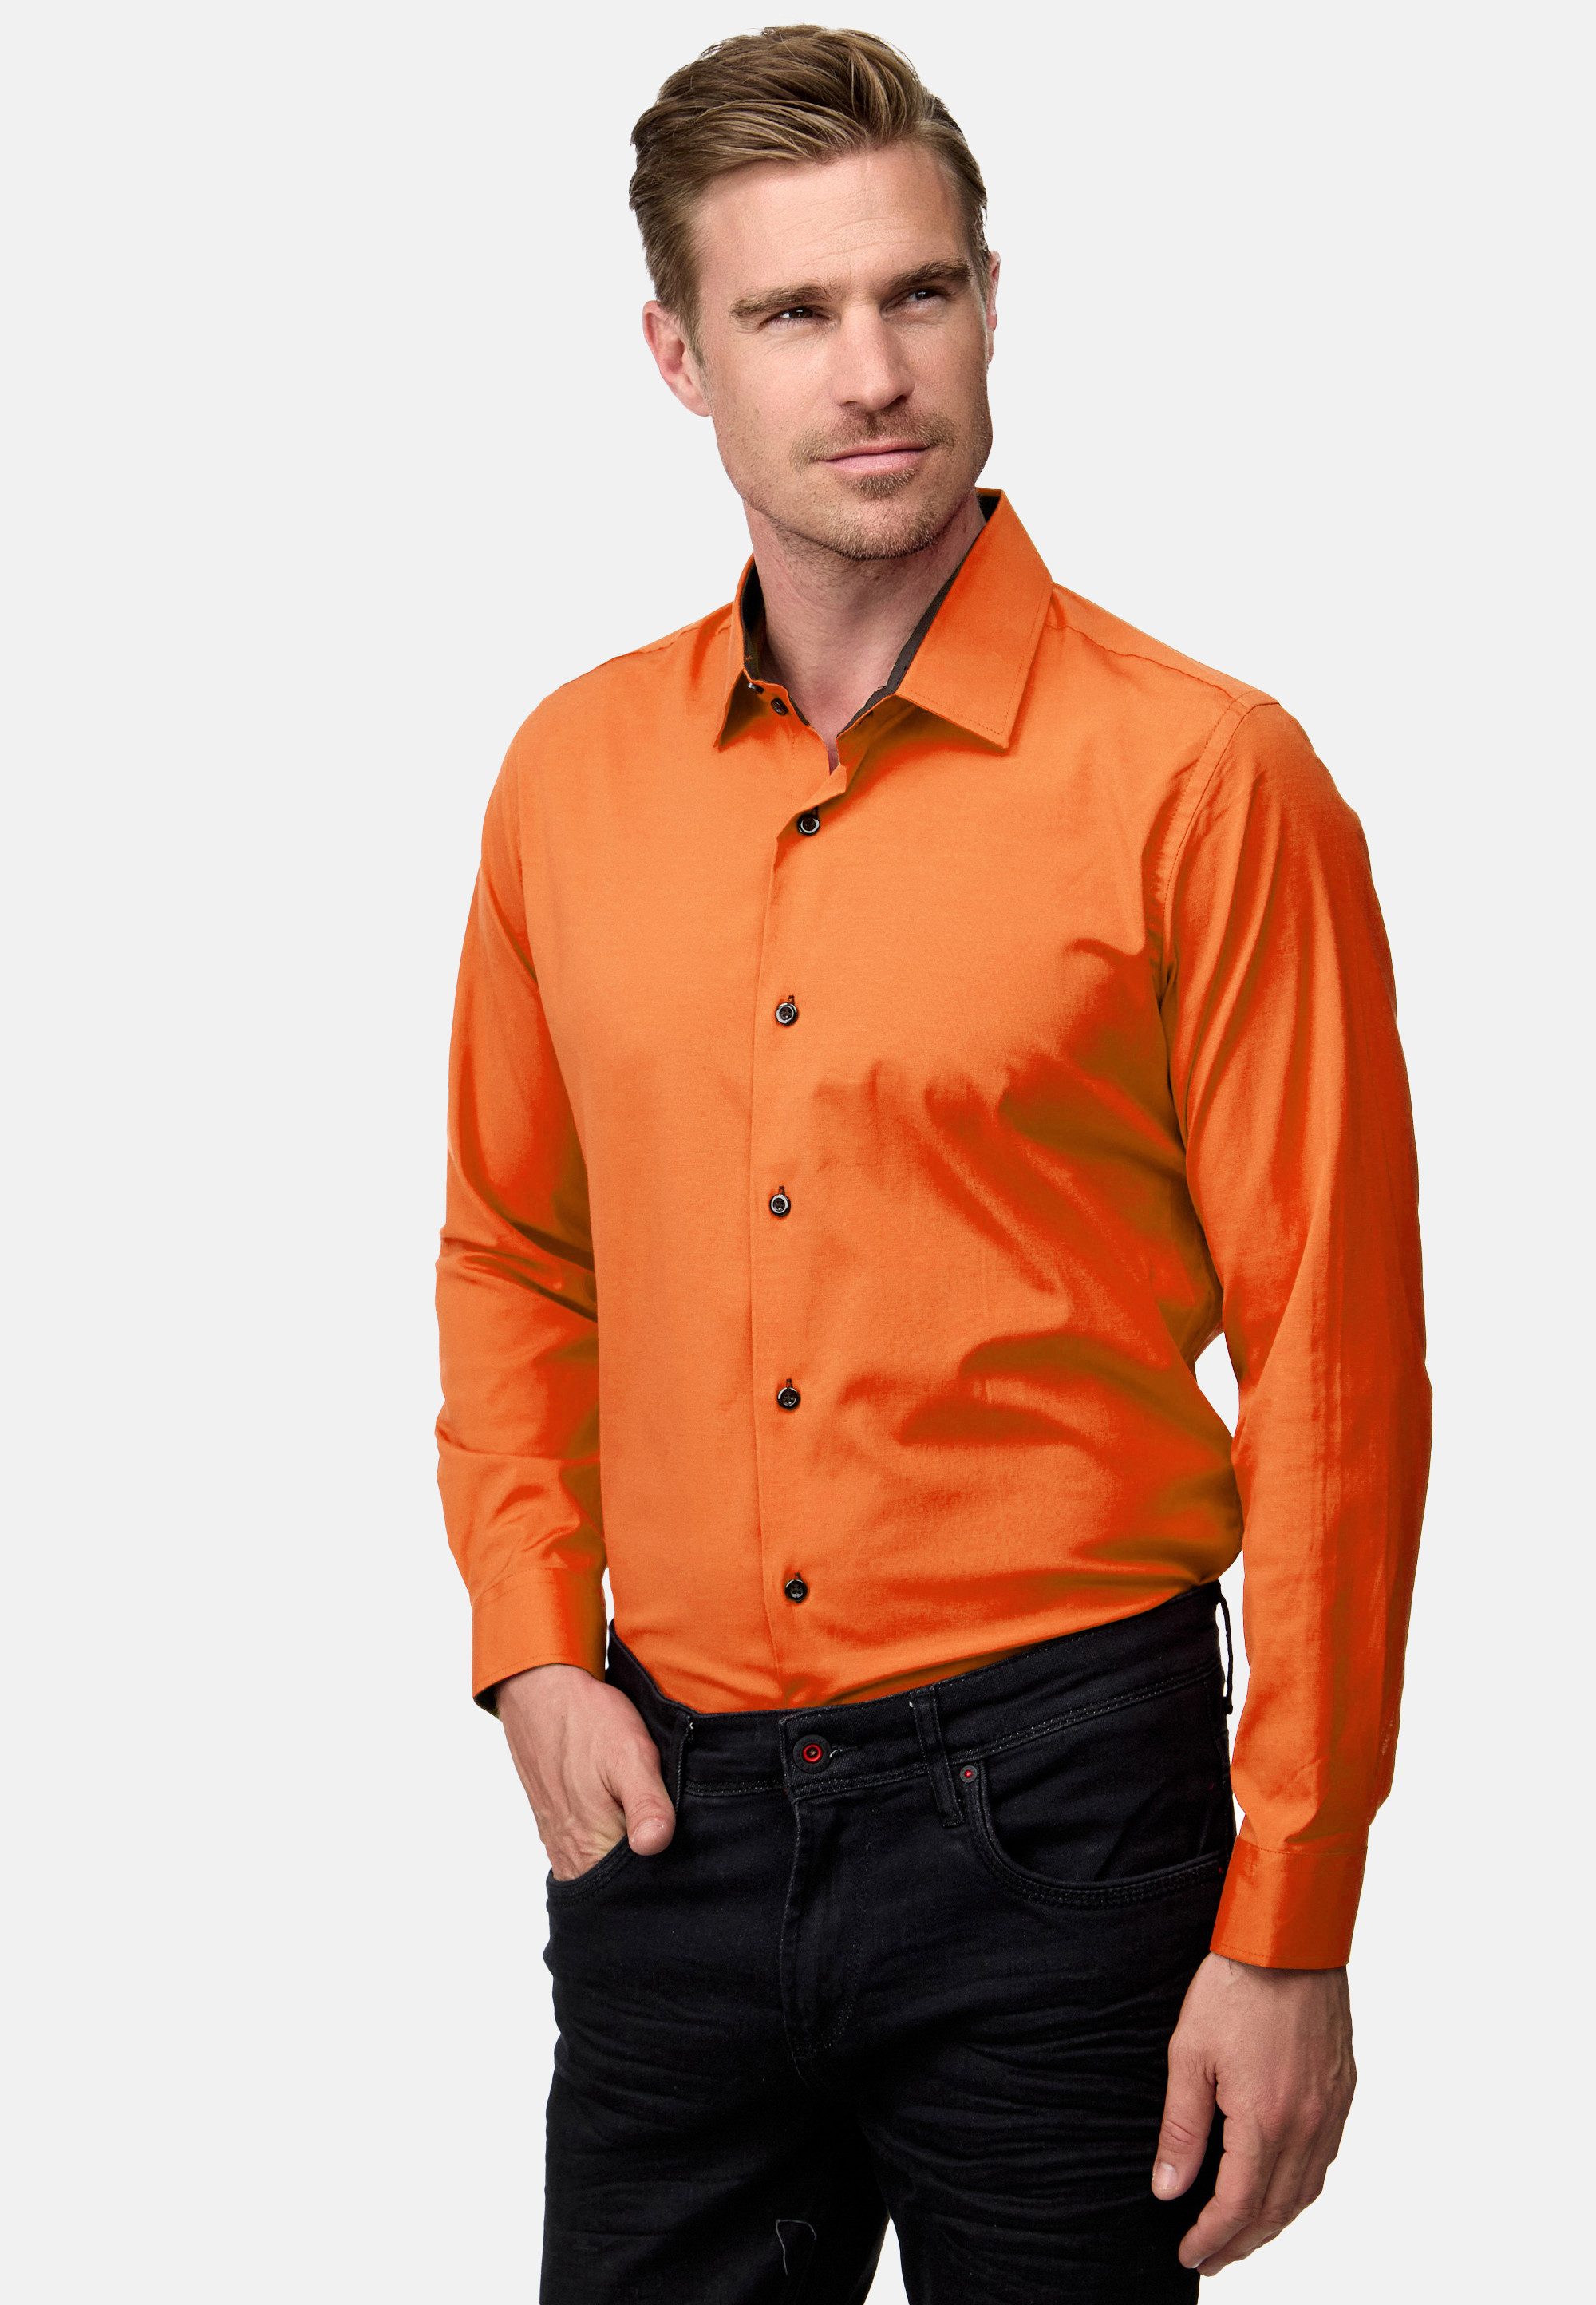 Rusty Neal Langarmhemd mit trendigem Farbkontrast